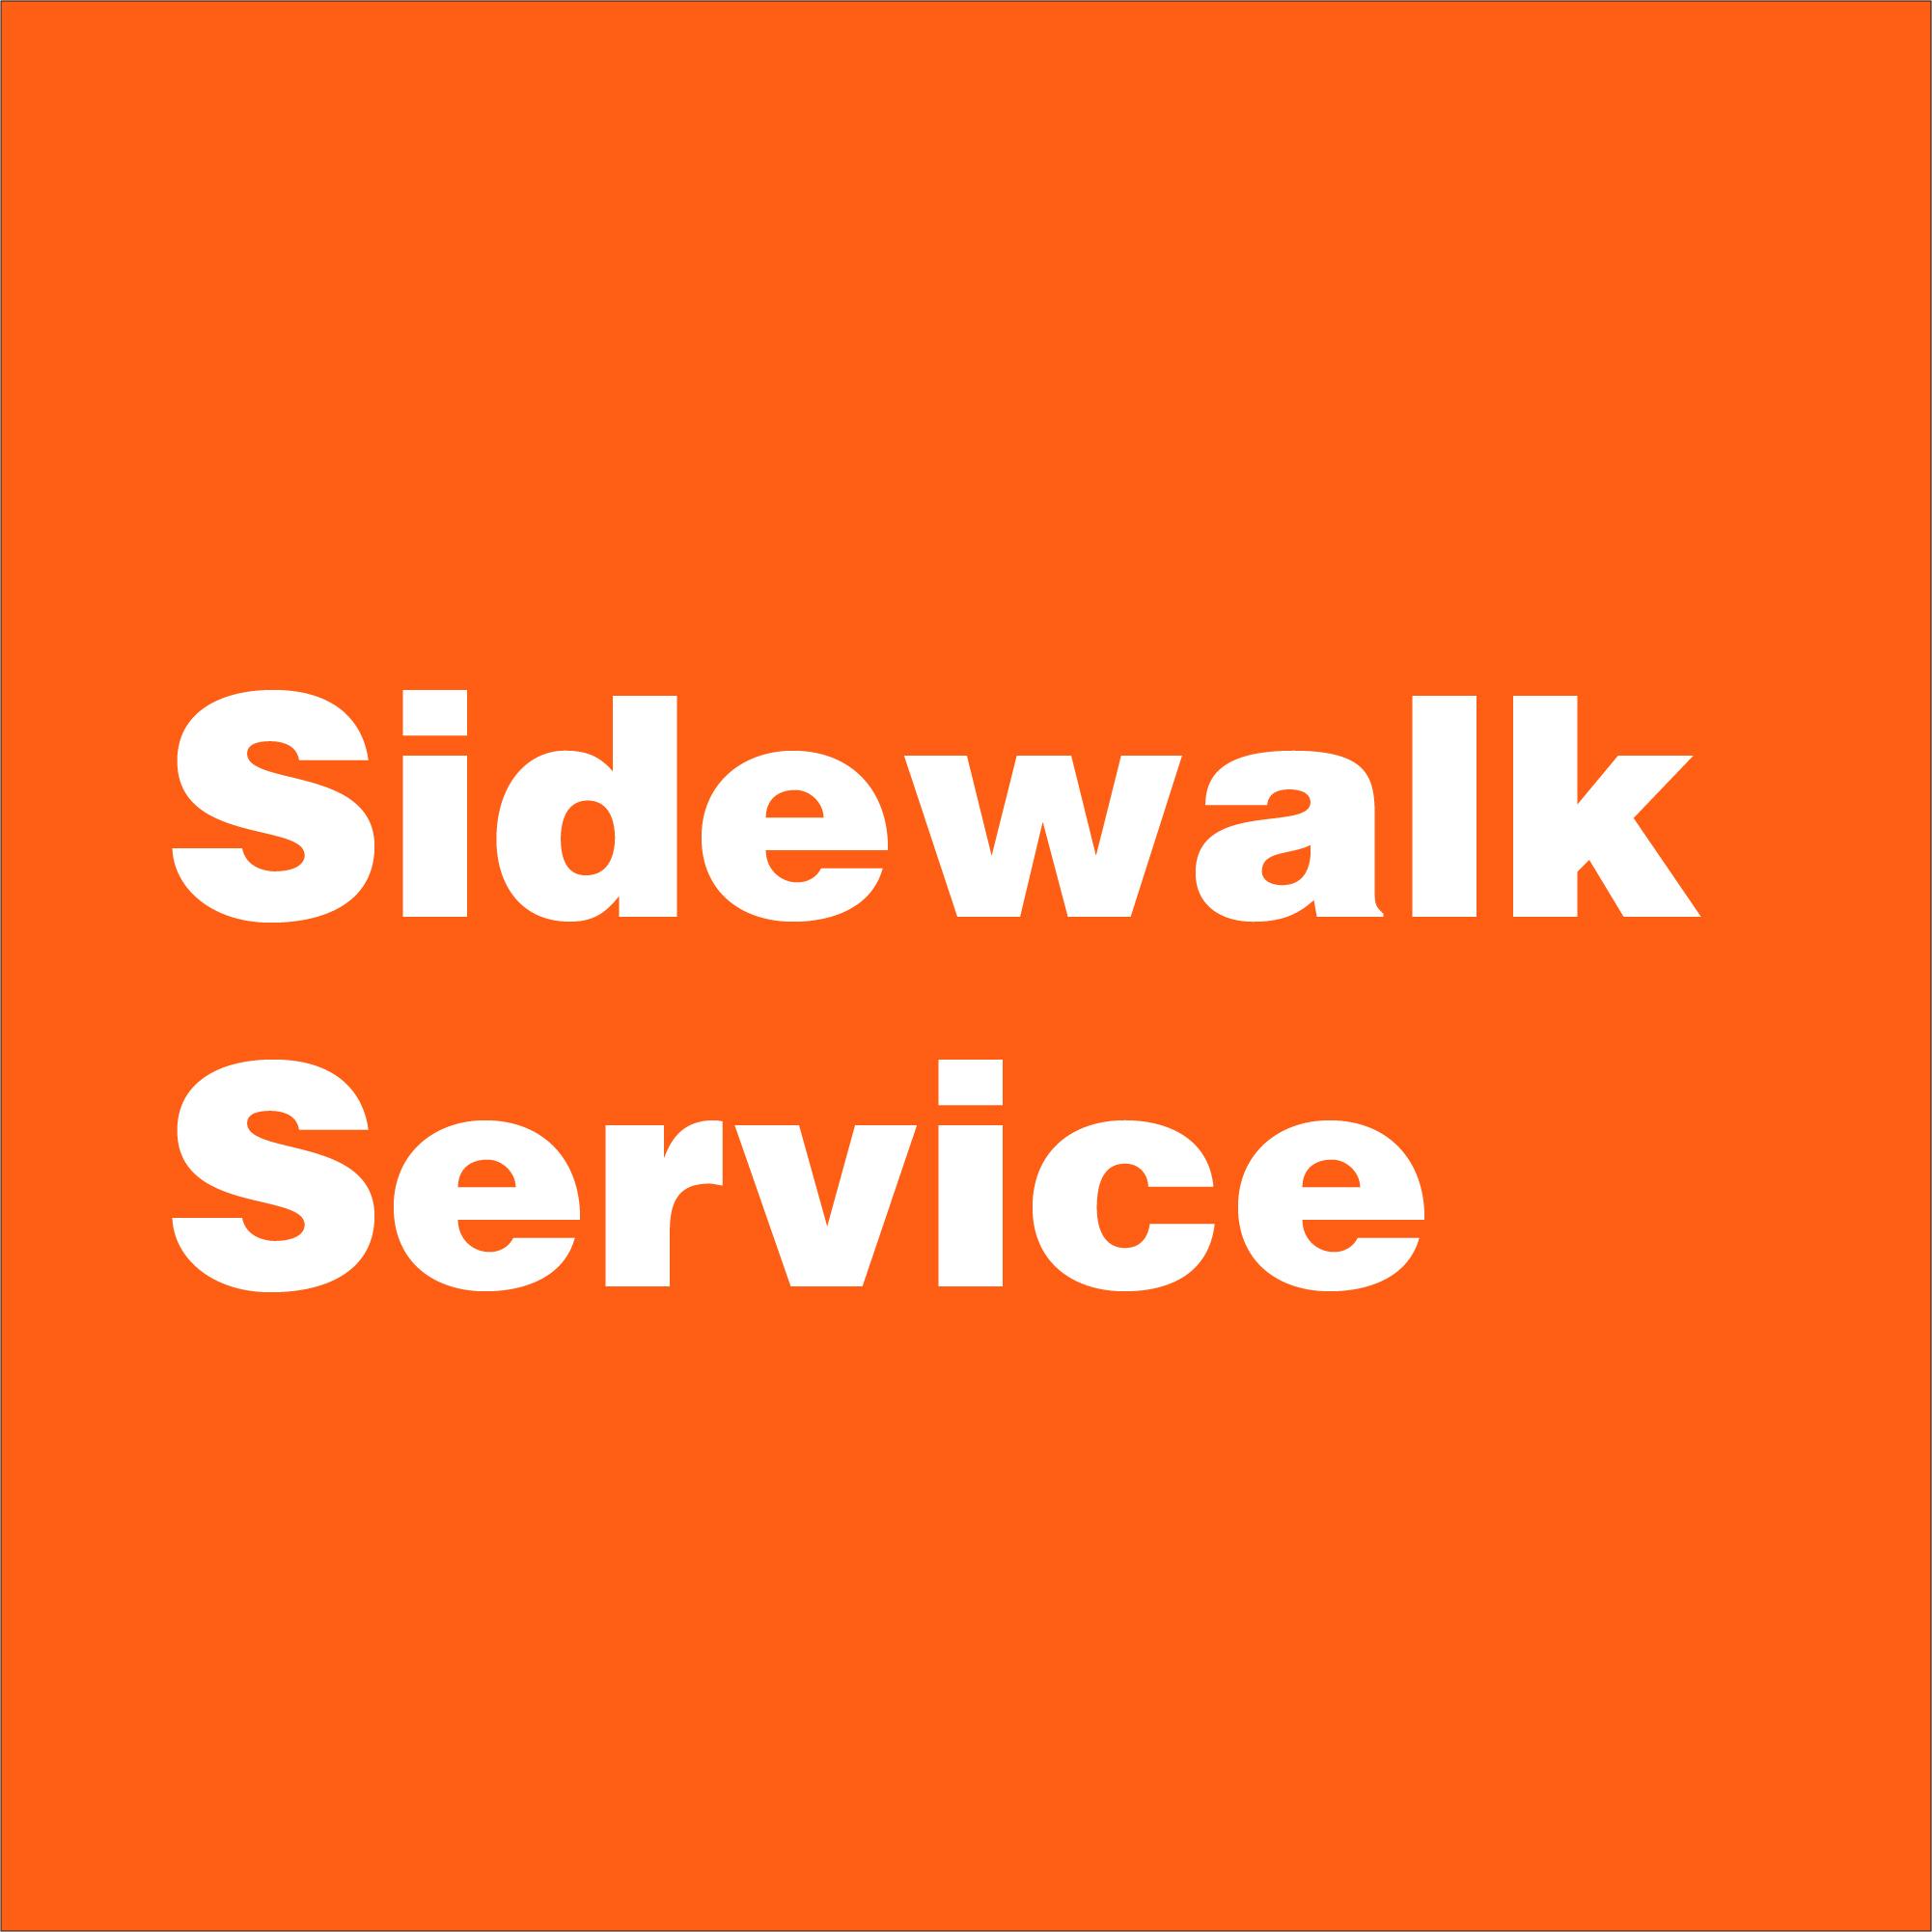 Sidewalk2 image